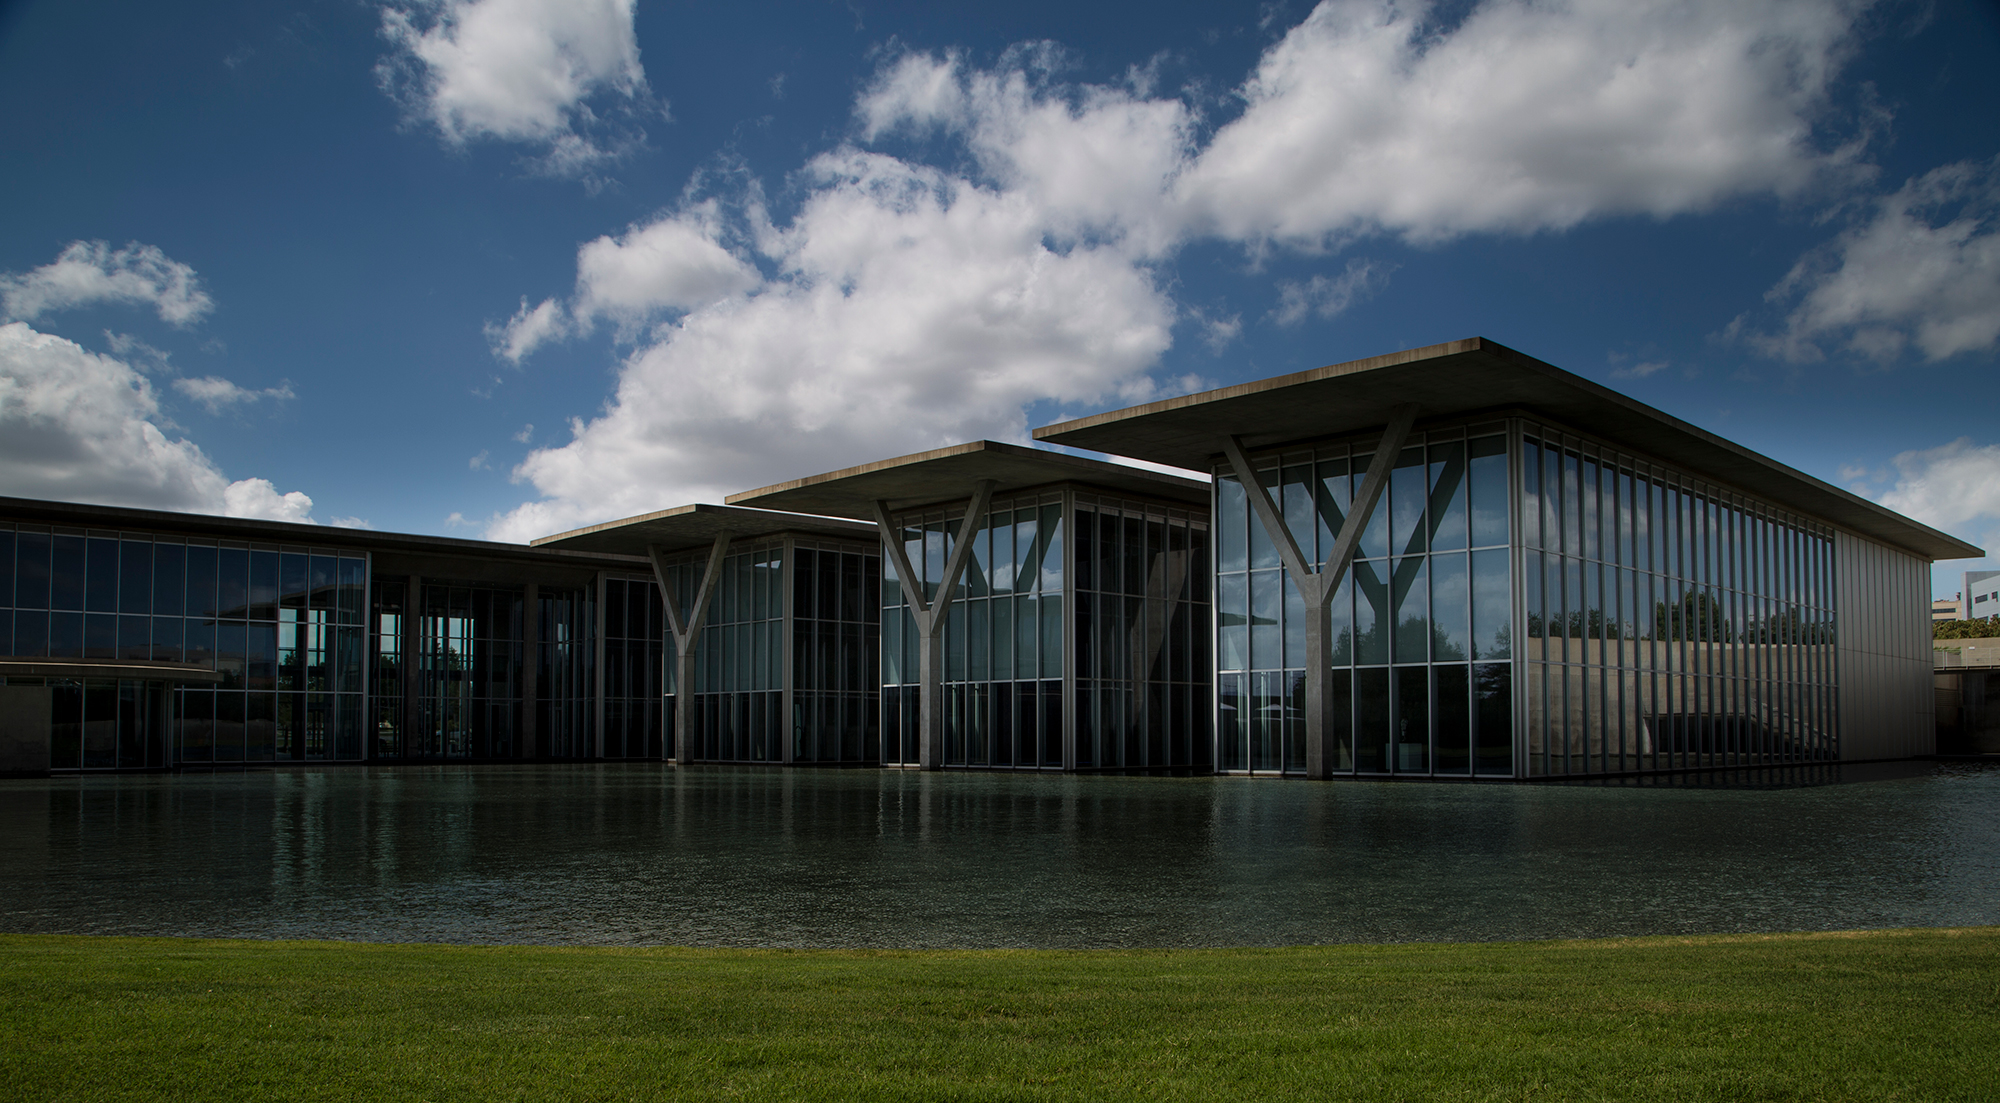 Tadao Ando Modern Art Museum of Fort Worth